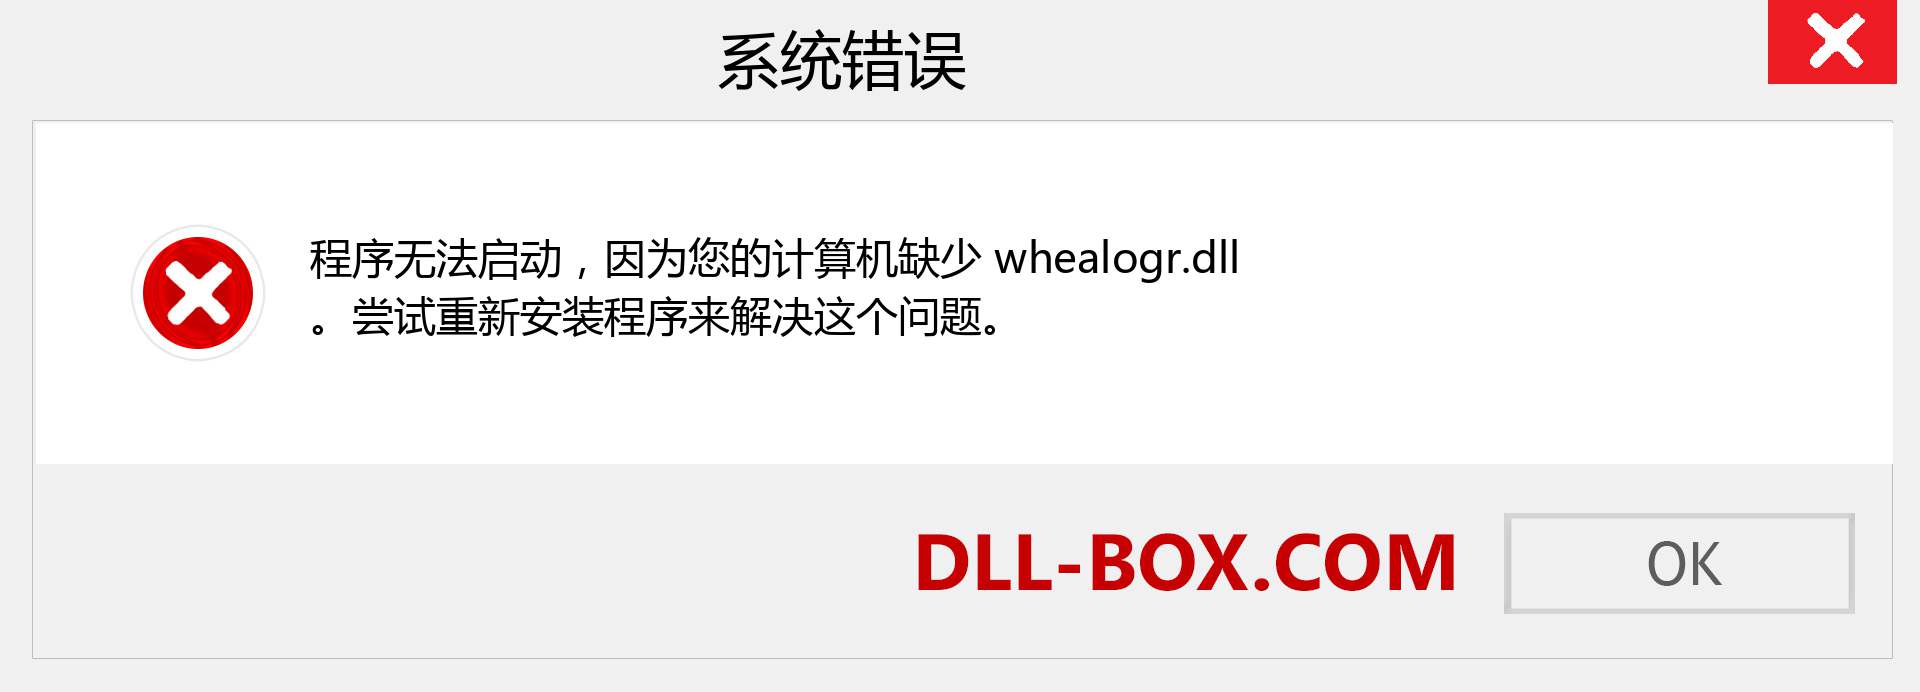 whealogr.dll 文件丢失？。 适用于 Windows 7、8、10 的下载 - 修复 Windows、照片、图像上的 whealogr dll 丢失错误